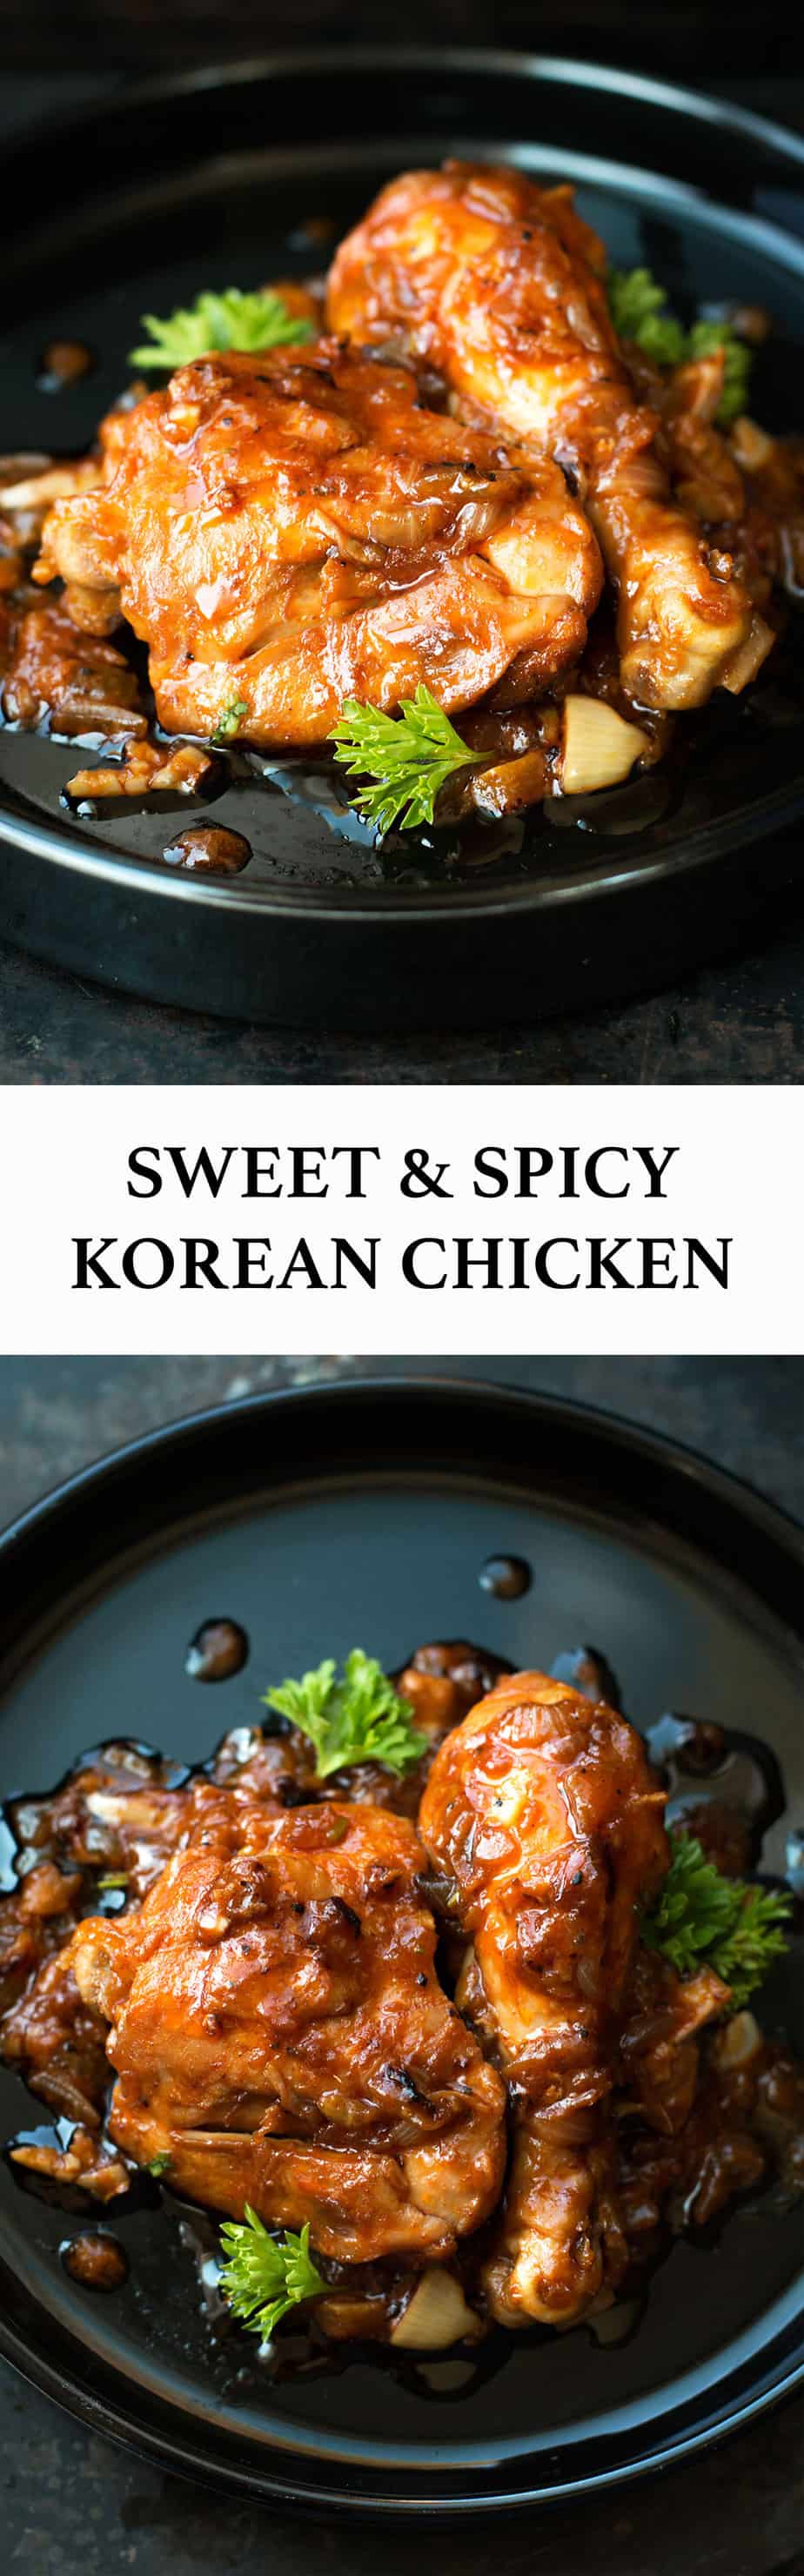 GOCHUJANG-SWEET-SPICY-KOREAN-CHICKEN-RECIPE